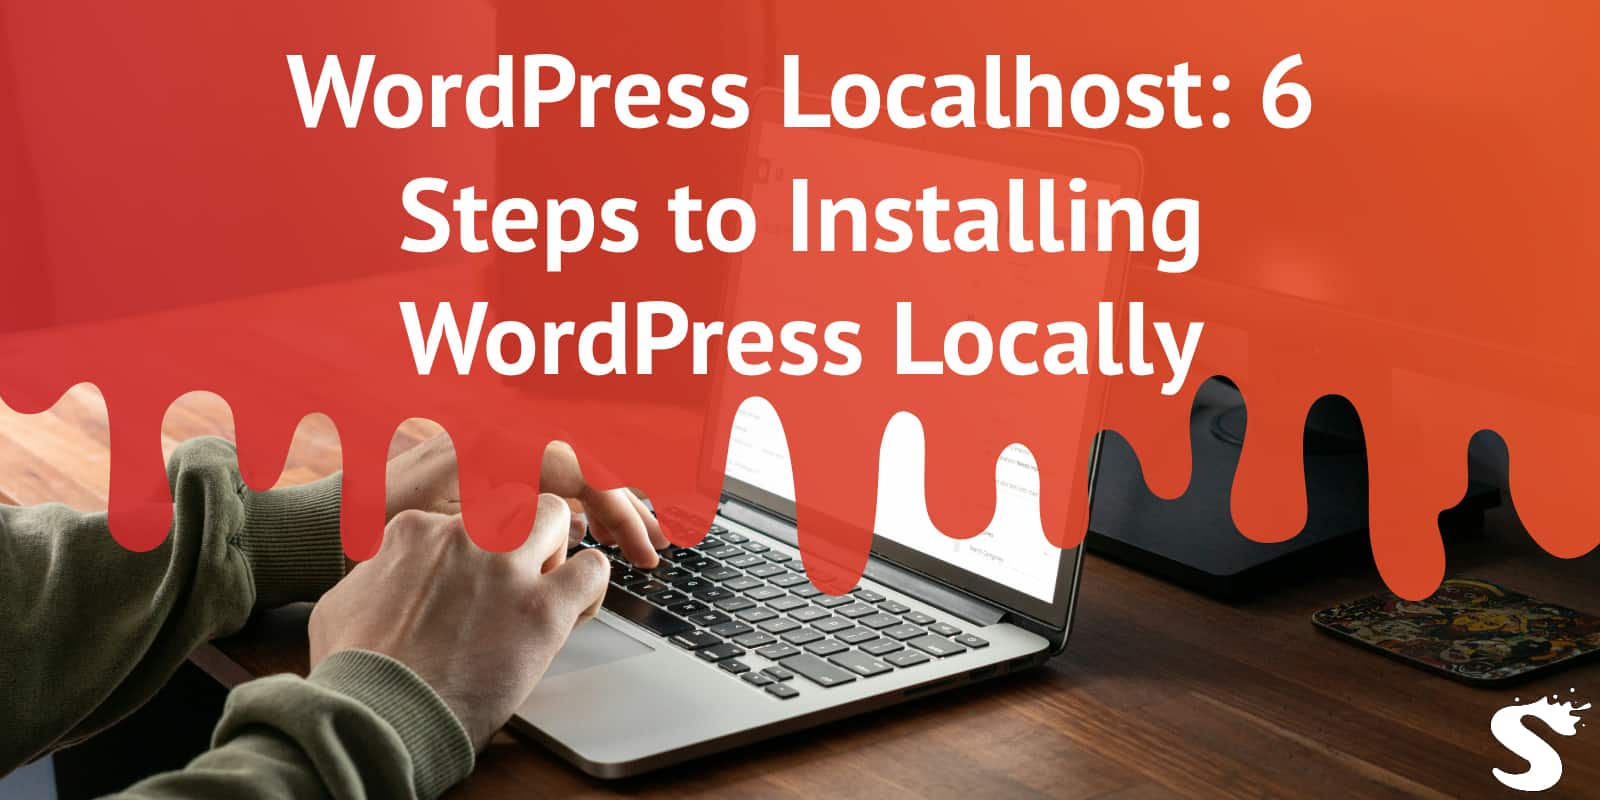 WordPress Localhost: 6 Steps to Installing WordPress Locally